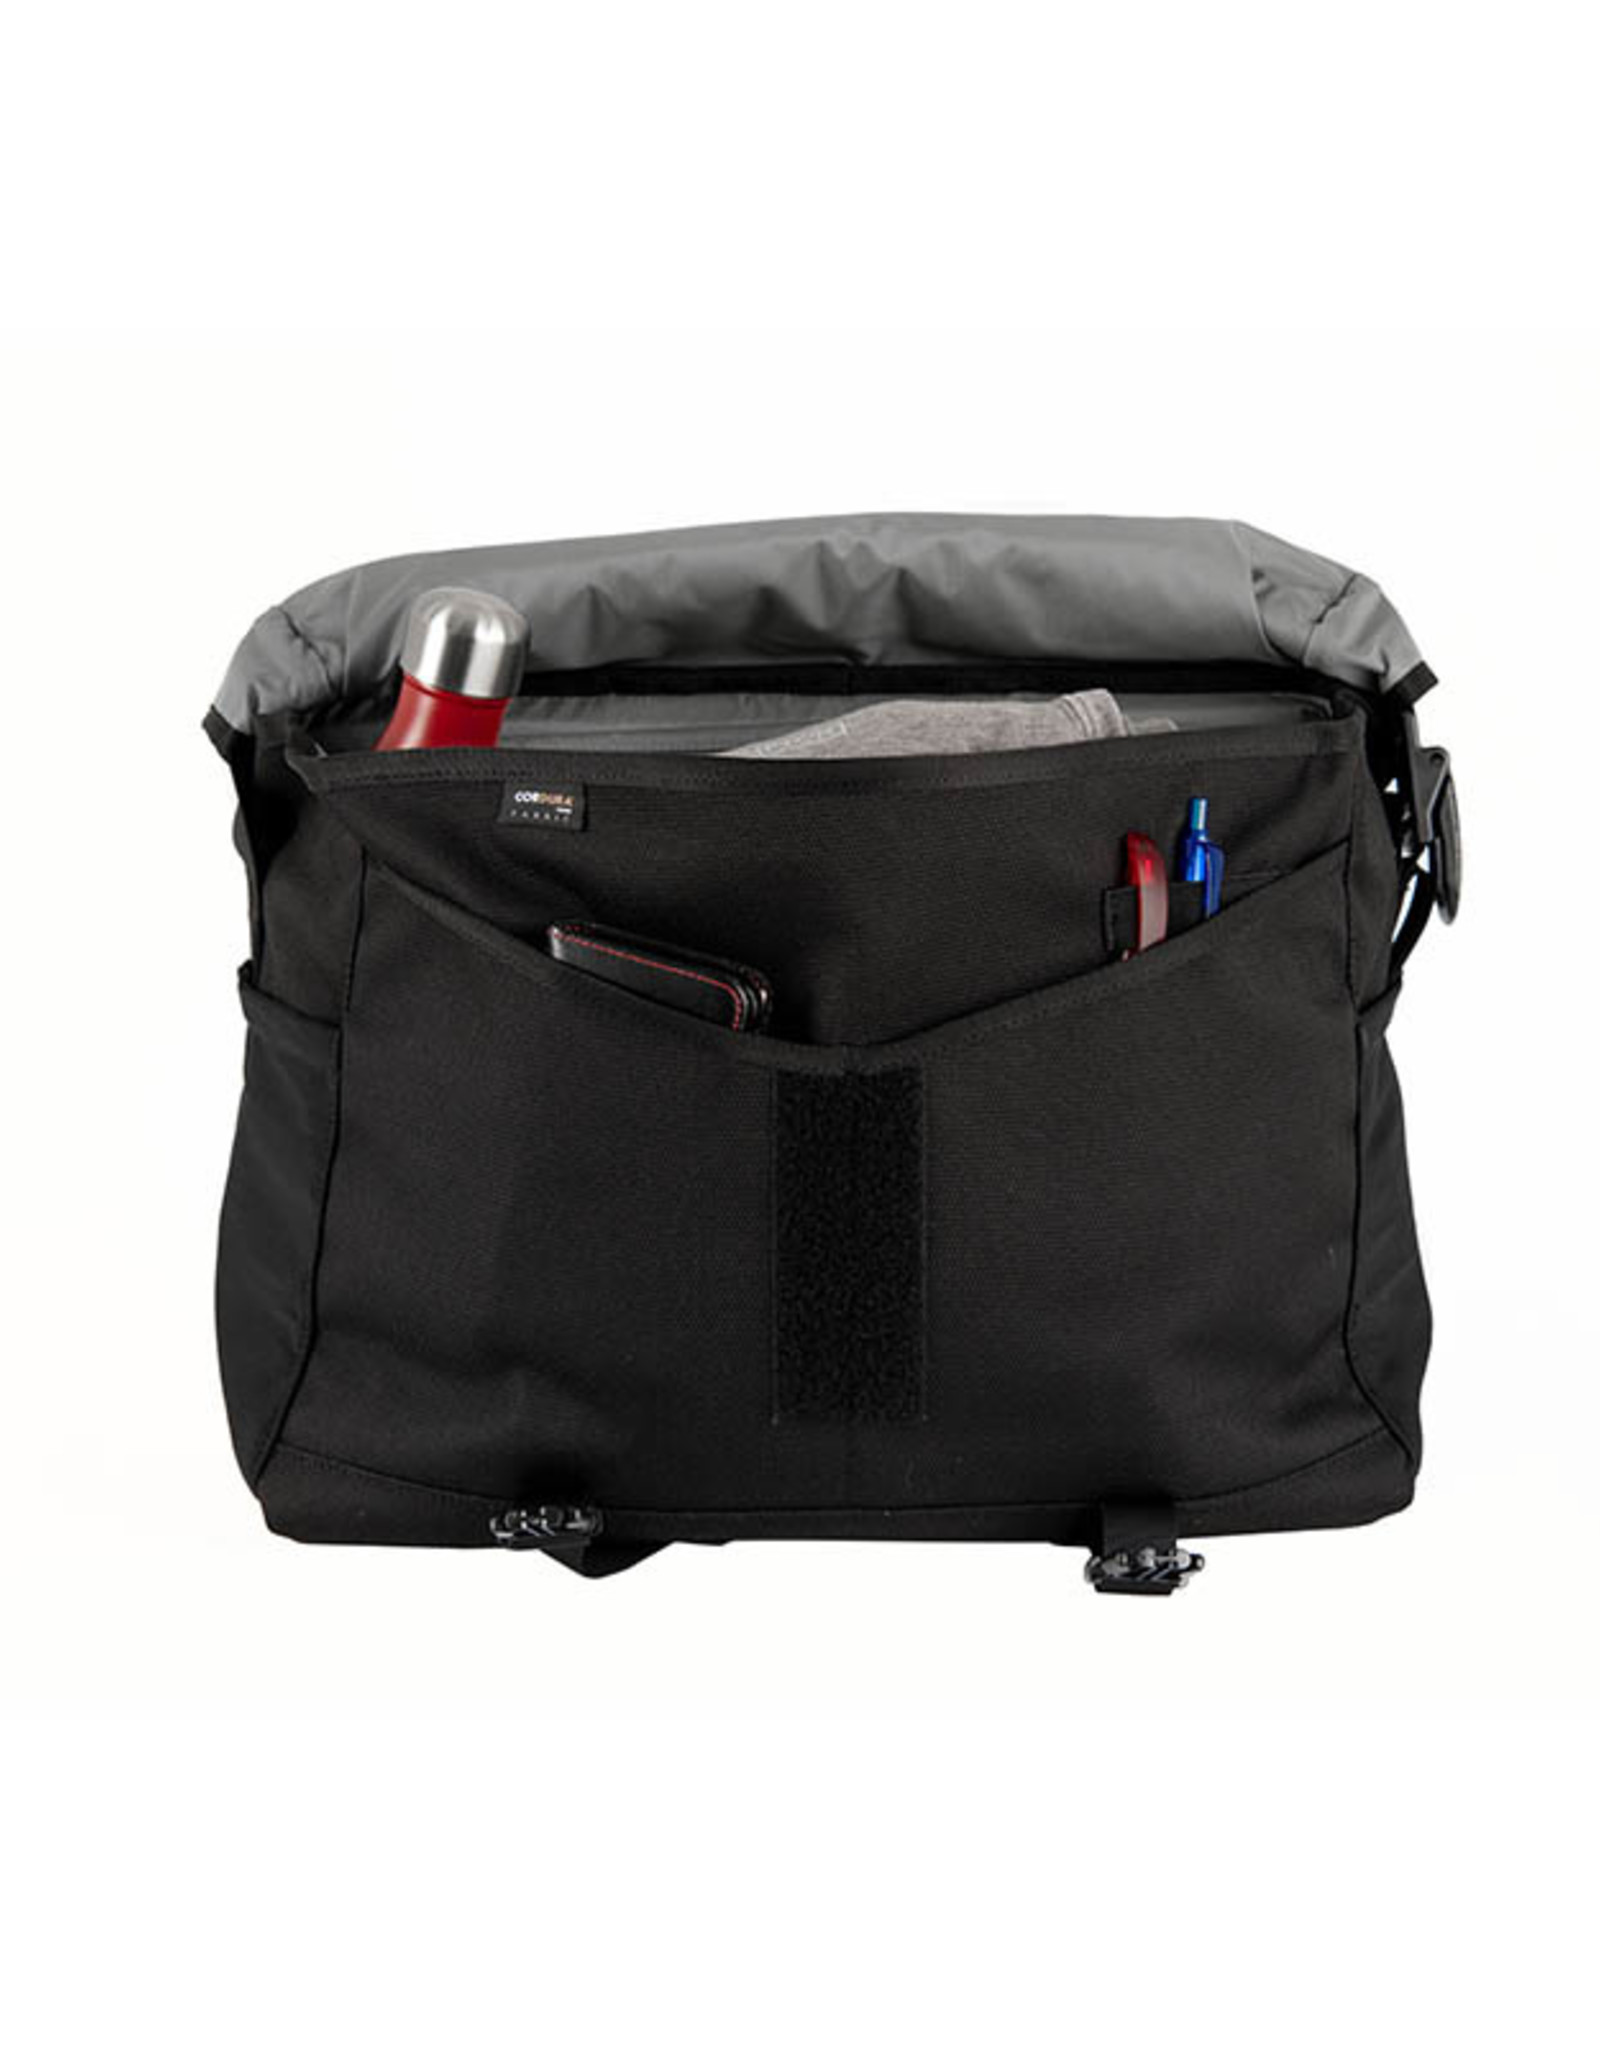 Brompton Brompton - Luggage - Metro Messenger L, Black with frame